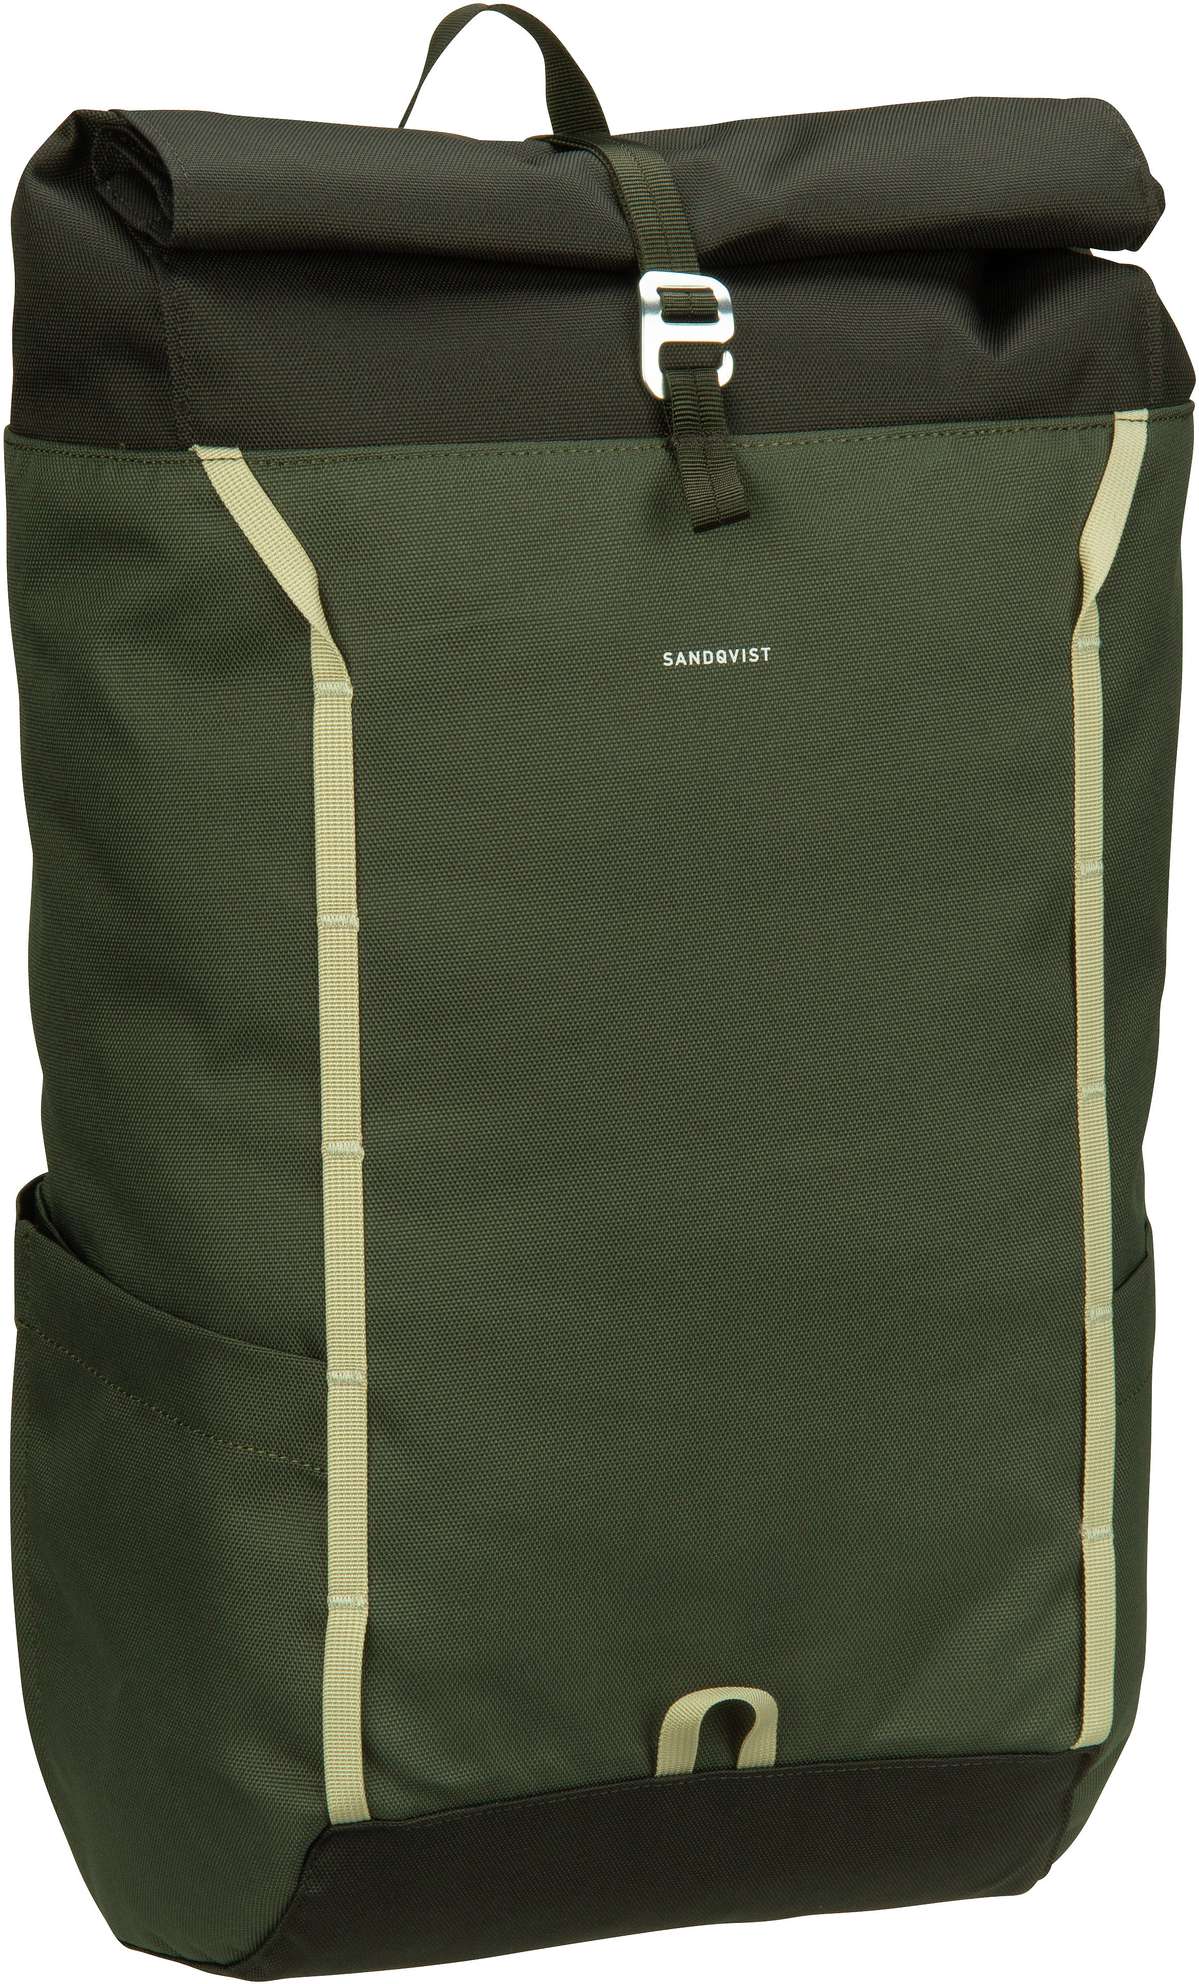 Sandqvist Arvid Rolltop Backpack  in Multi Green/Grey Webbing (15 Liter), Rolltop Rucksack